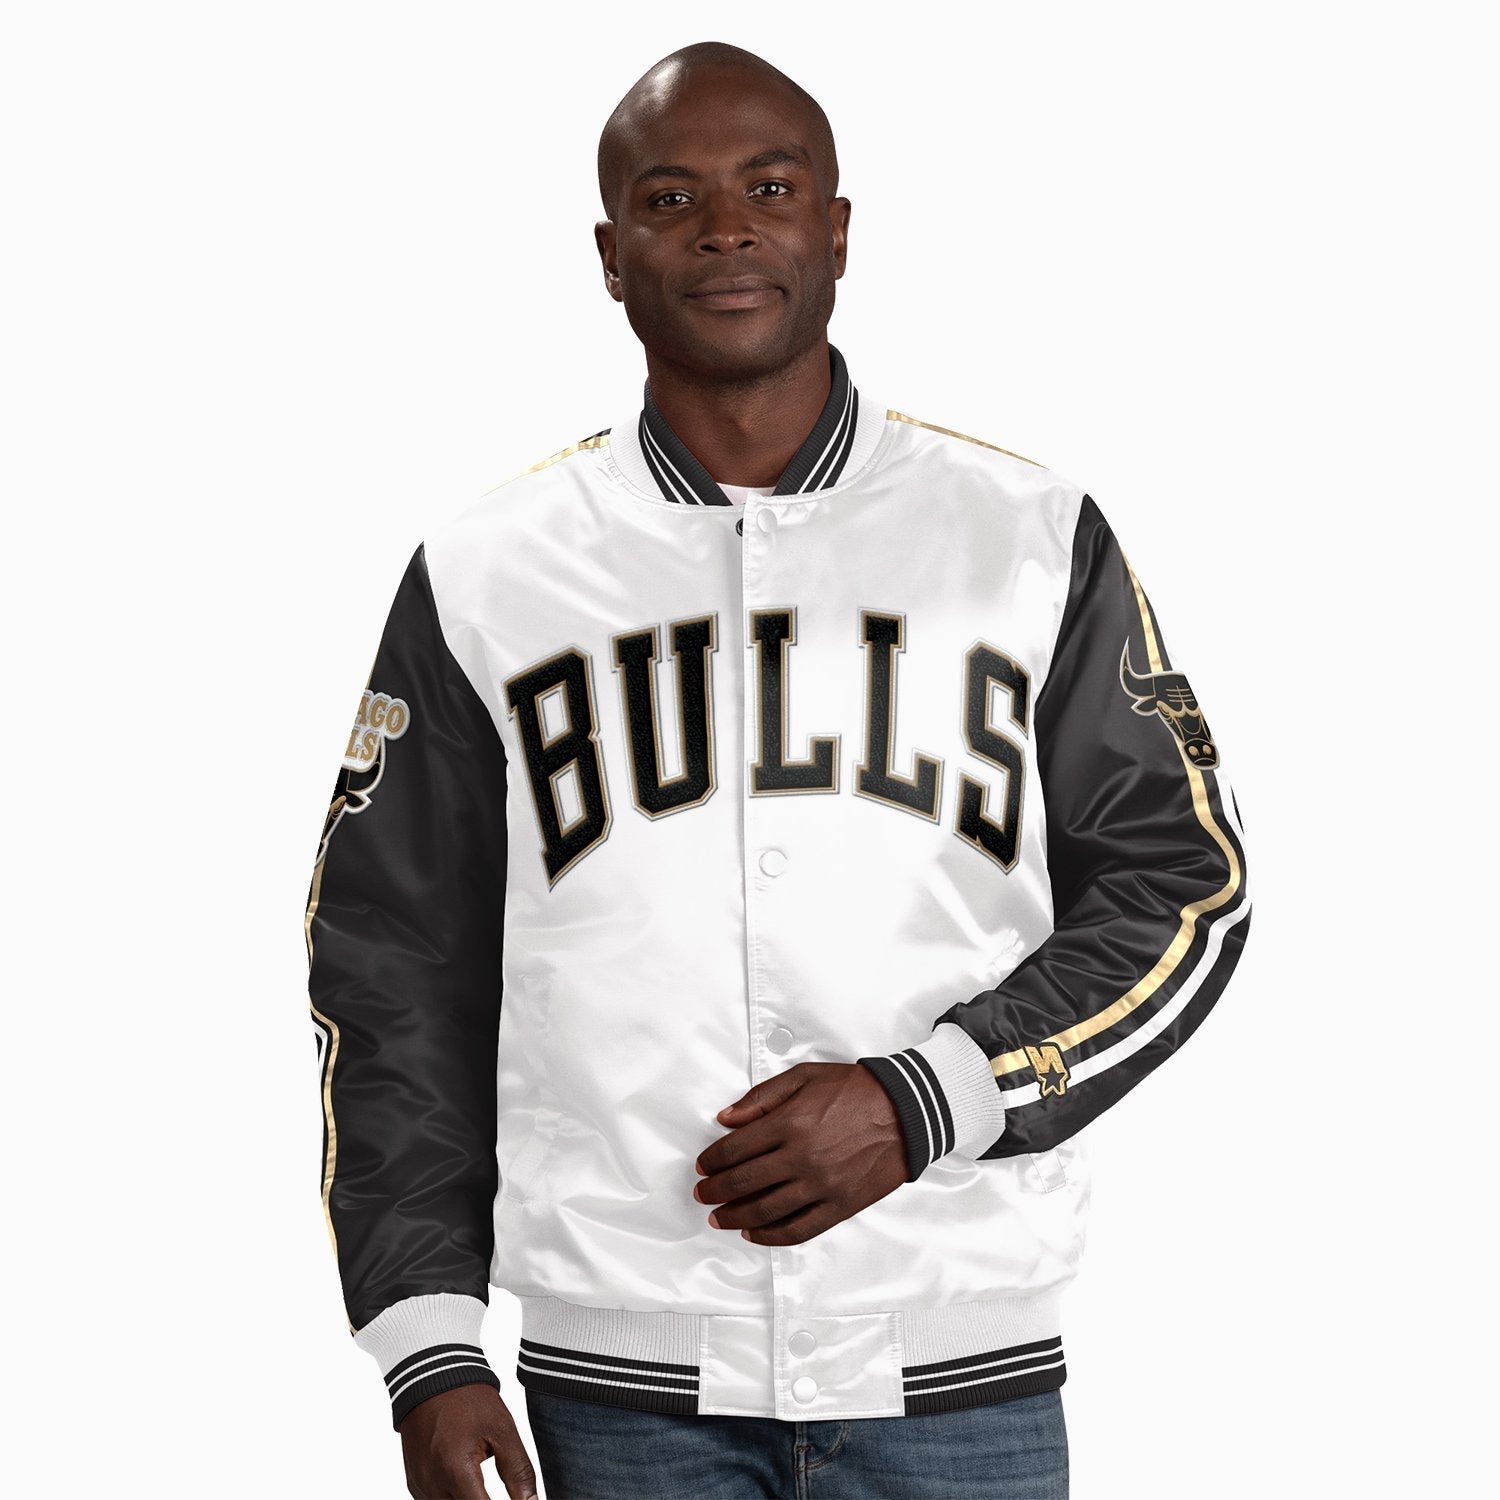 Chicago Bulls Black Jacket